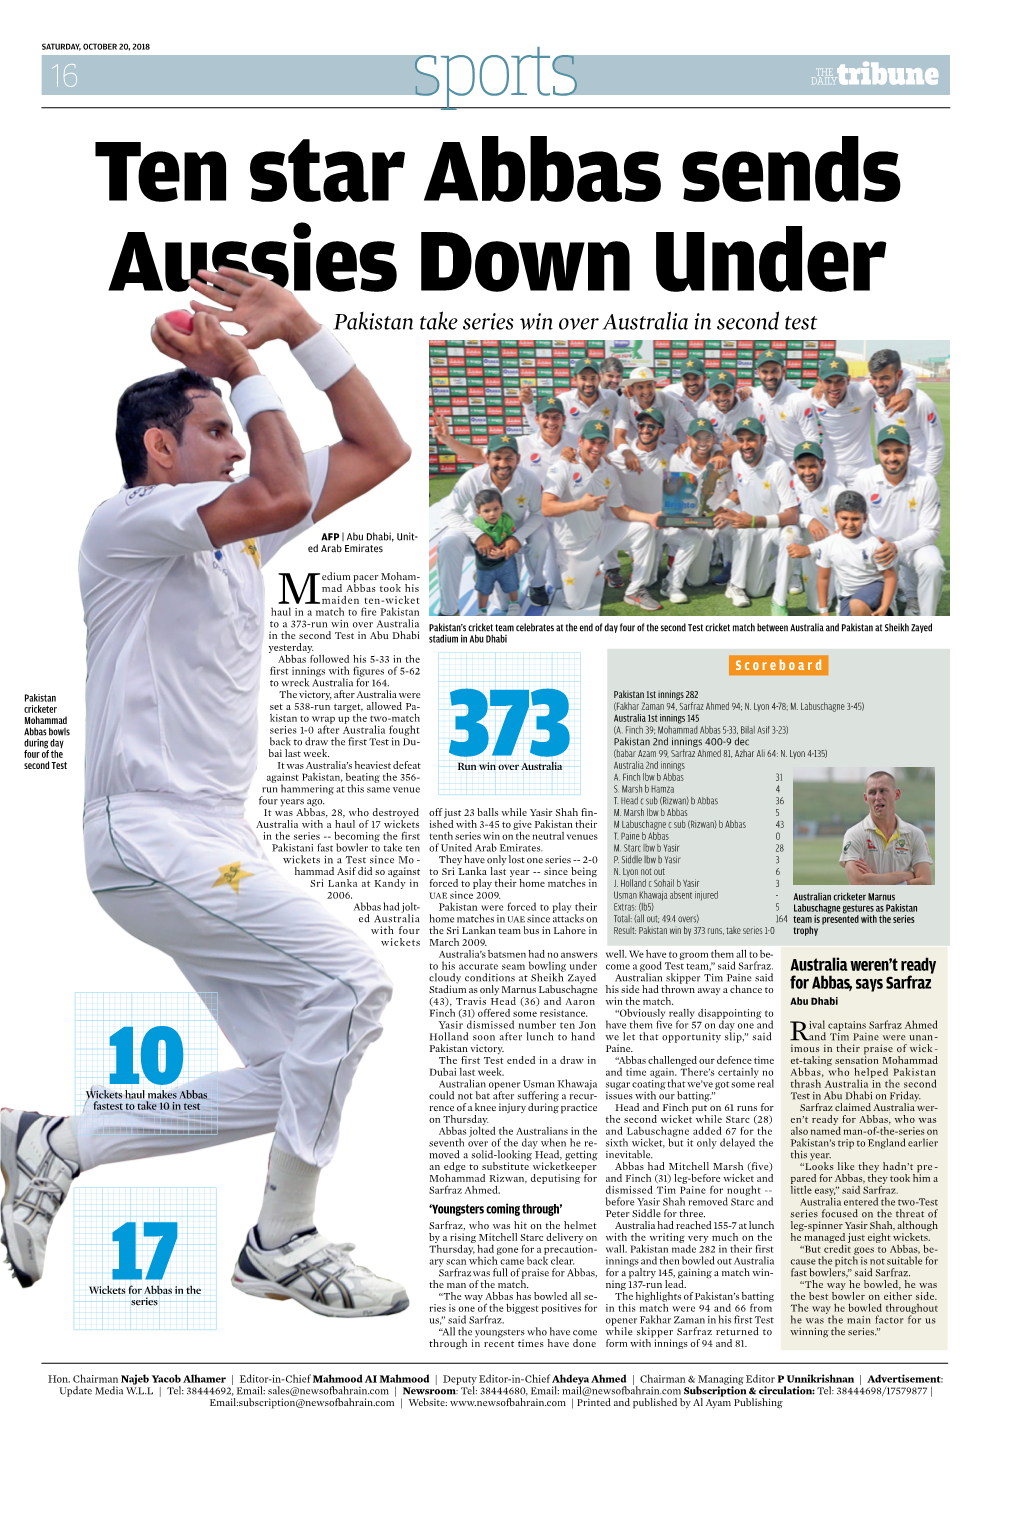 Pakistan Take Series Win Over Australia in Second Test